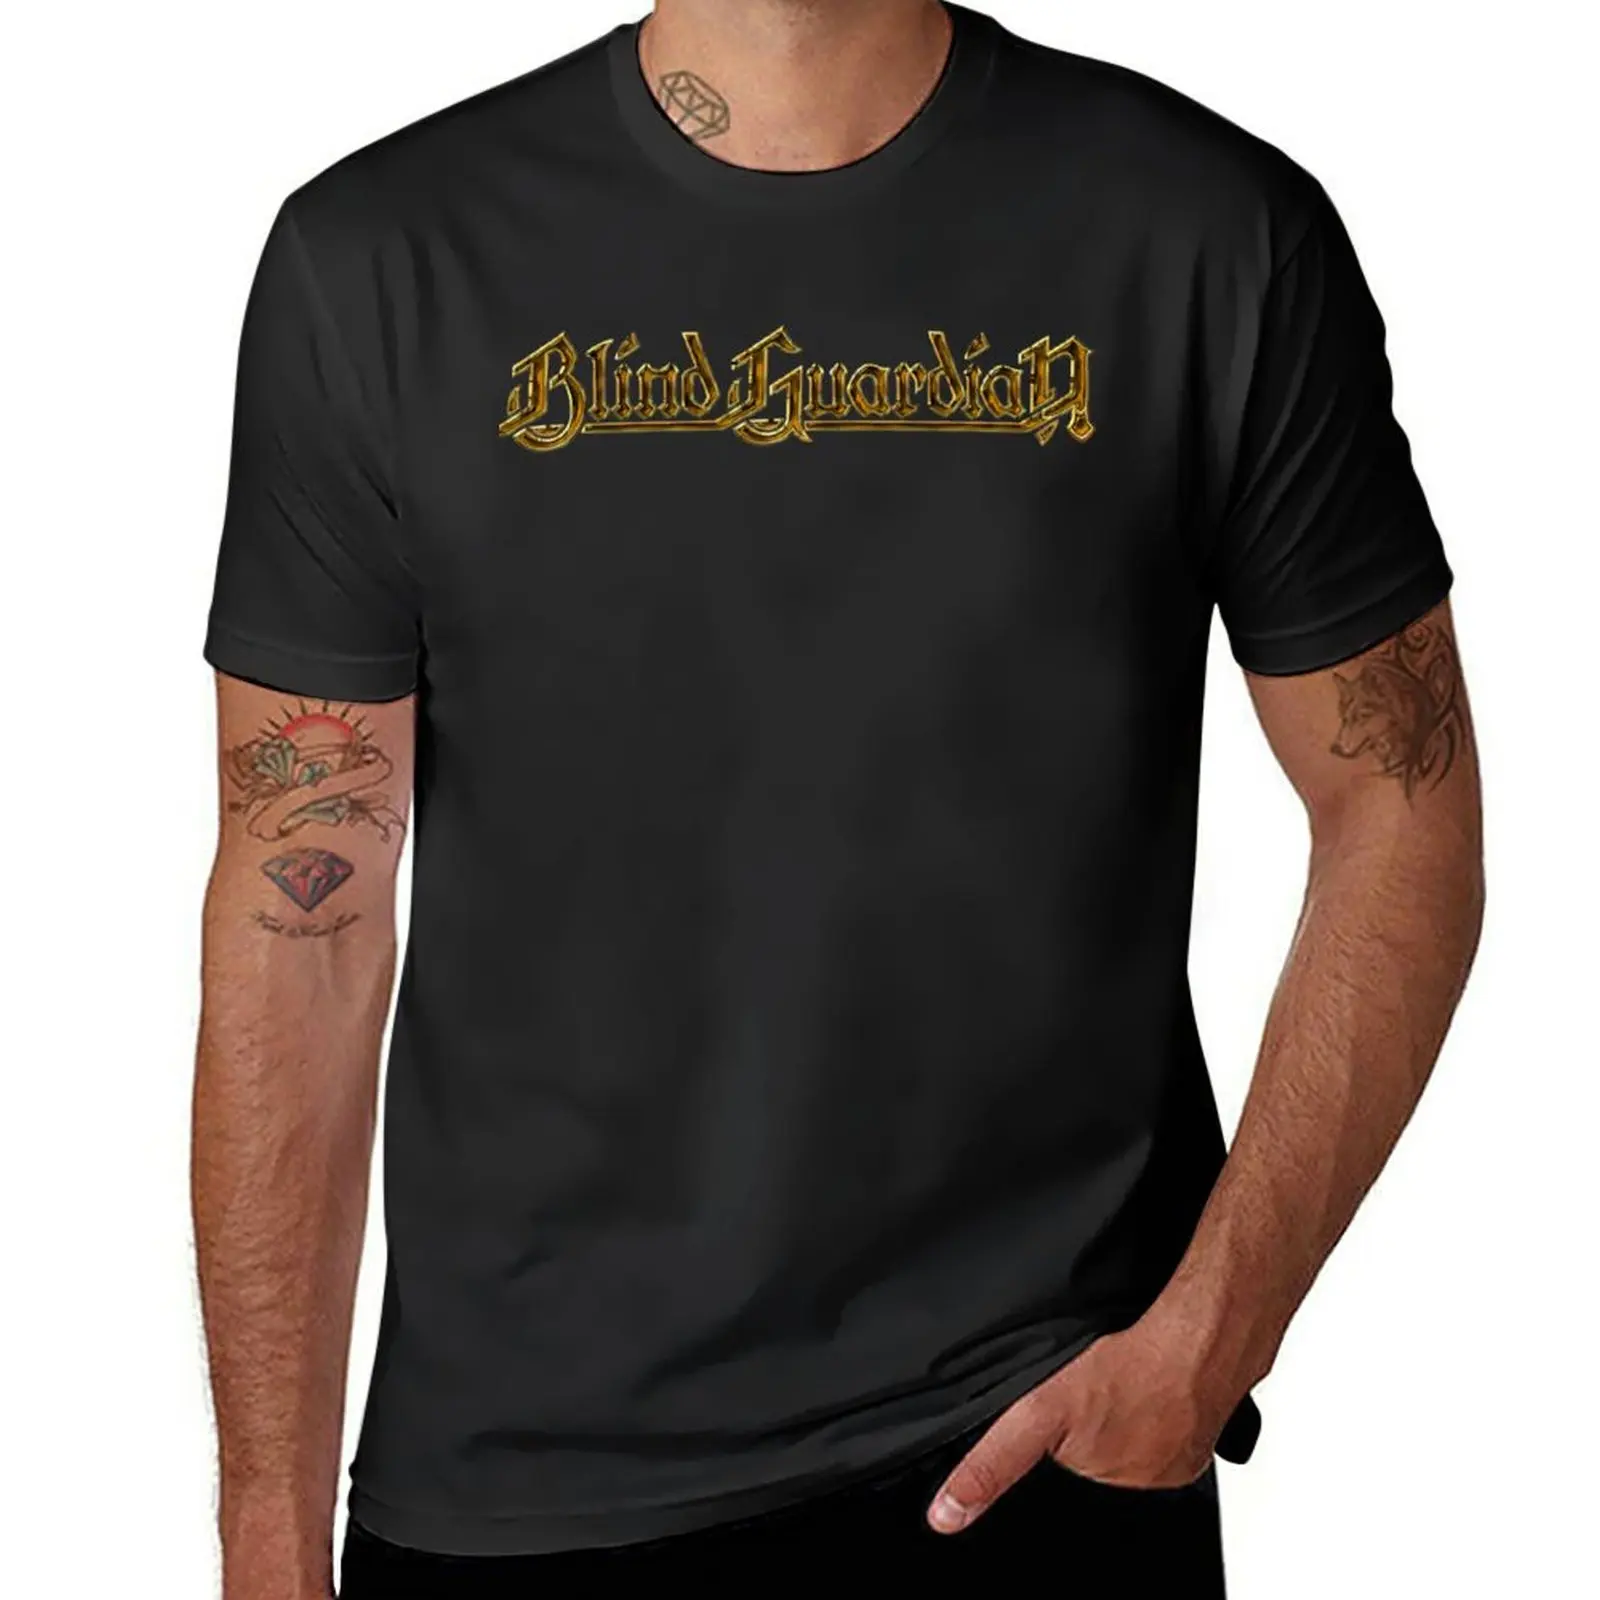 

New blind guardian merchant T-Shirt Tee shirt sports fan t-shirts hippie clothes plus size t shirts mens cotton t shirts